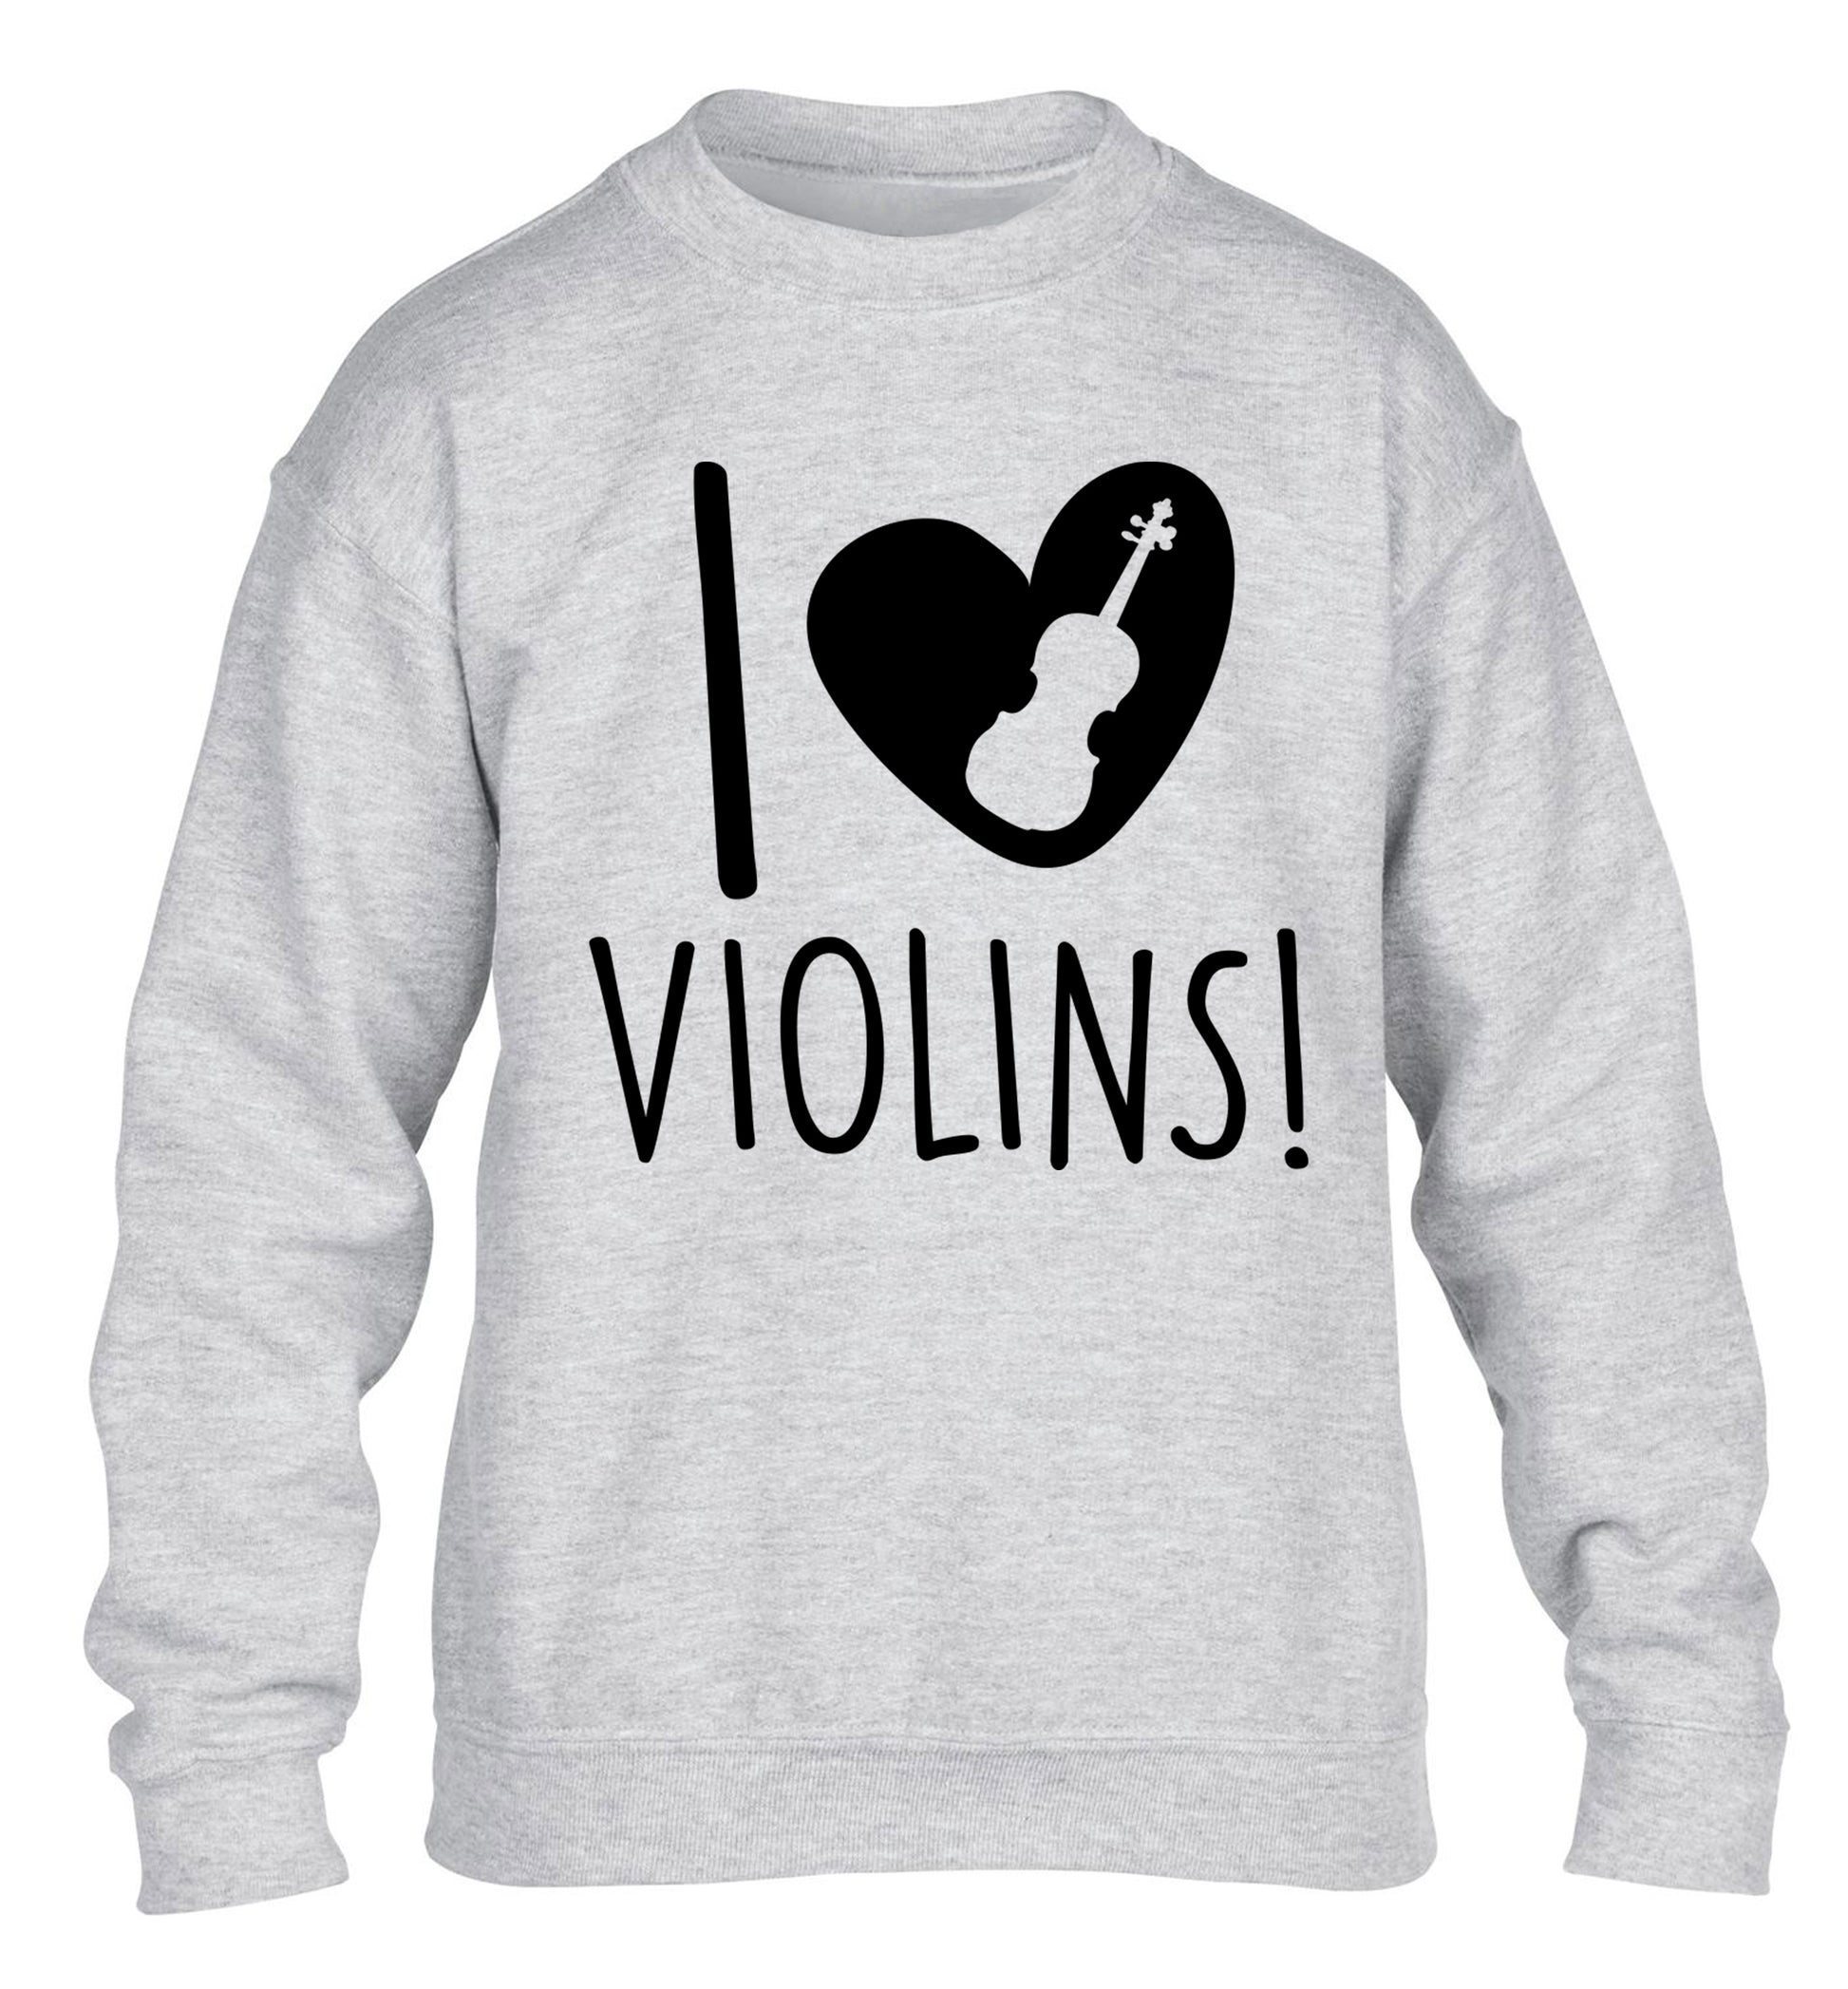 I Love Violins children's grey sweater 12-13 Years